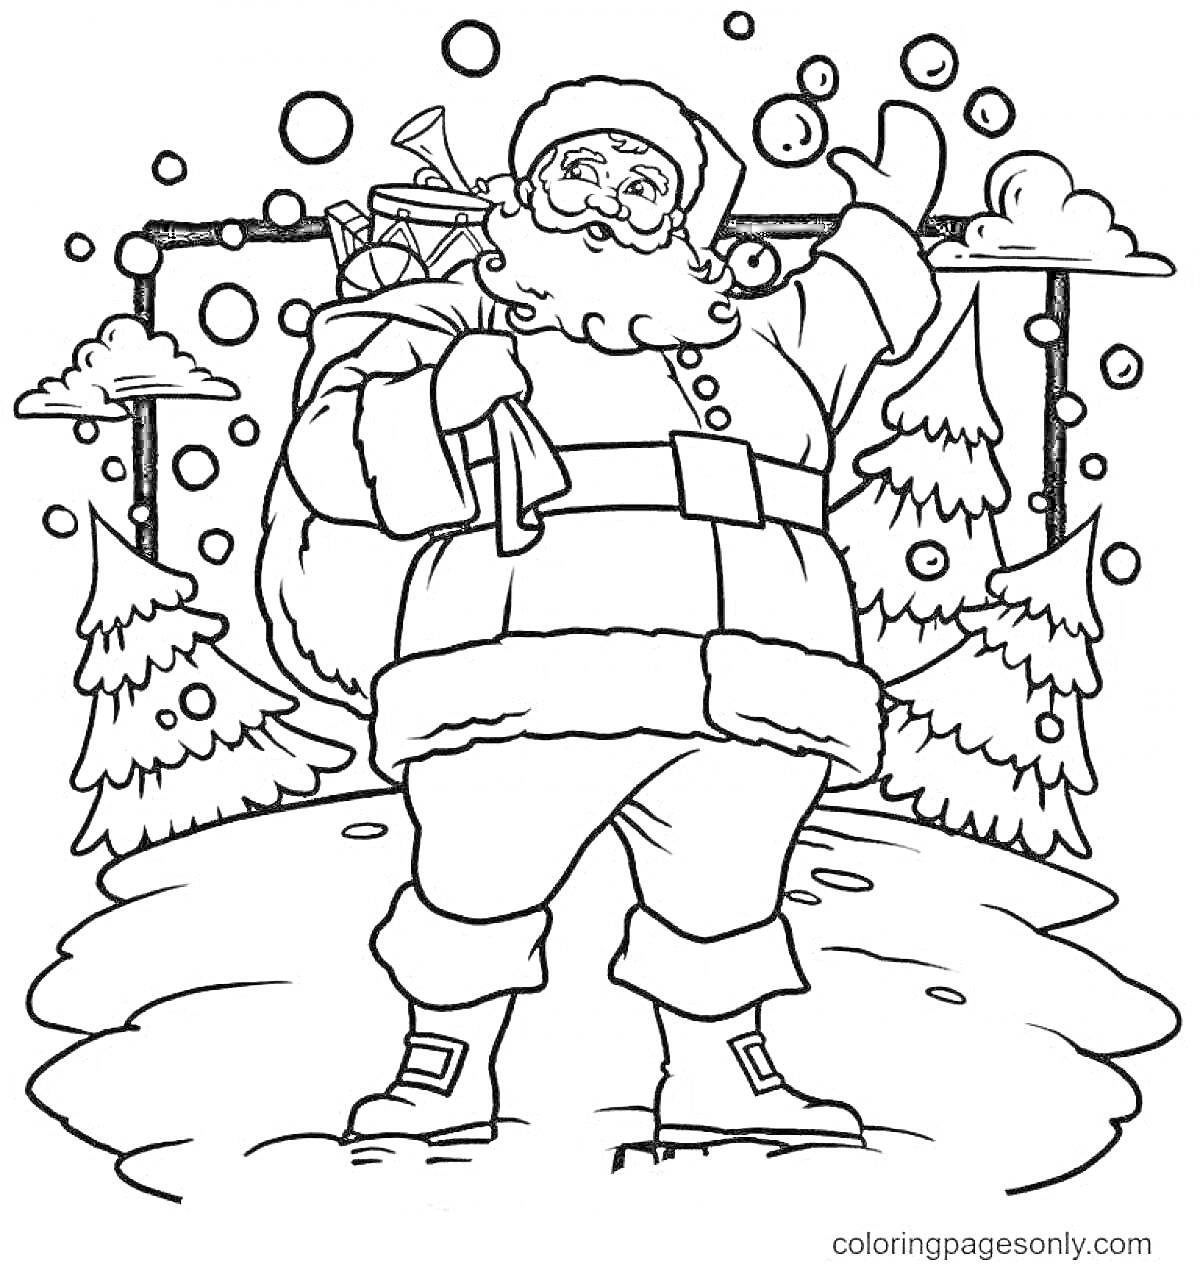 Санта с мешком подарков на зимнем фоне с ёлками и снегом